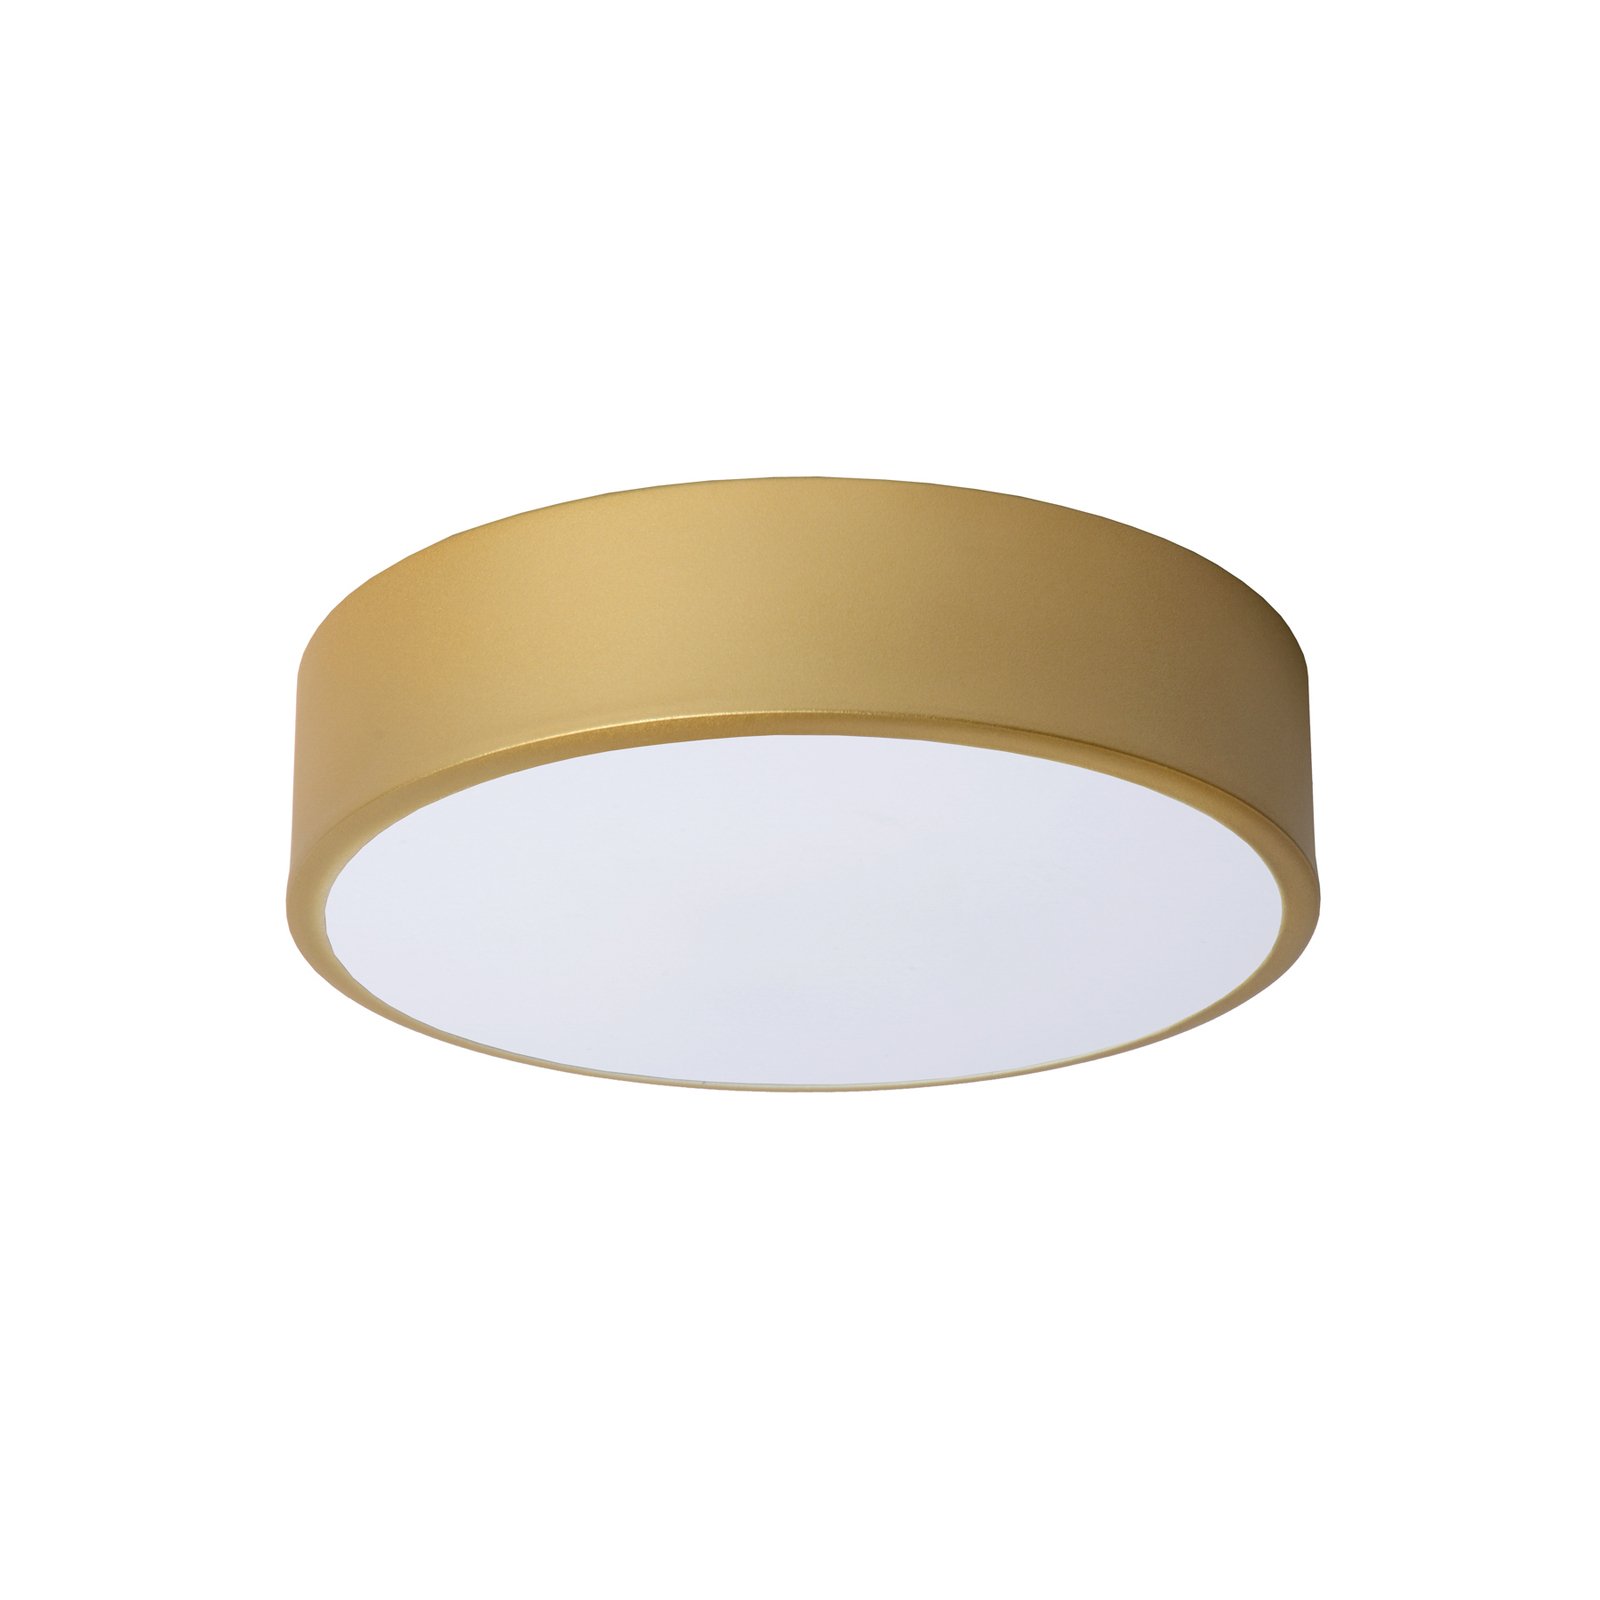 LED-taklampe Unar, gull matt, Ø 20 cm